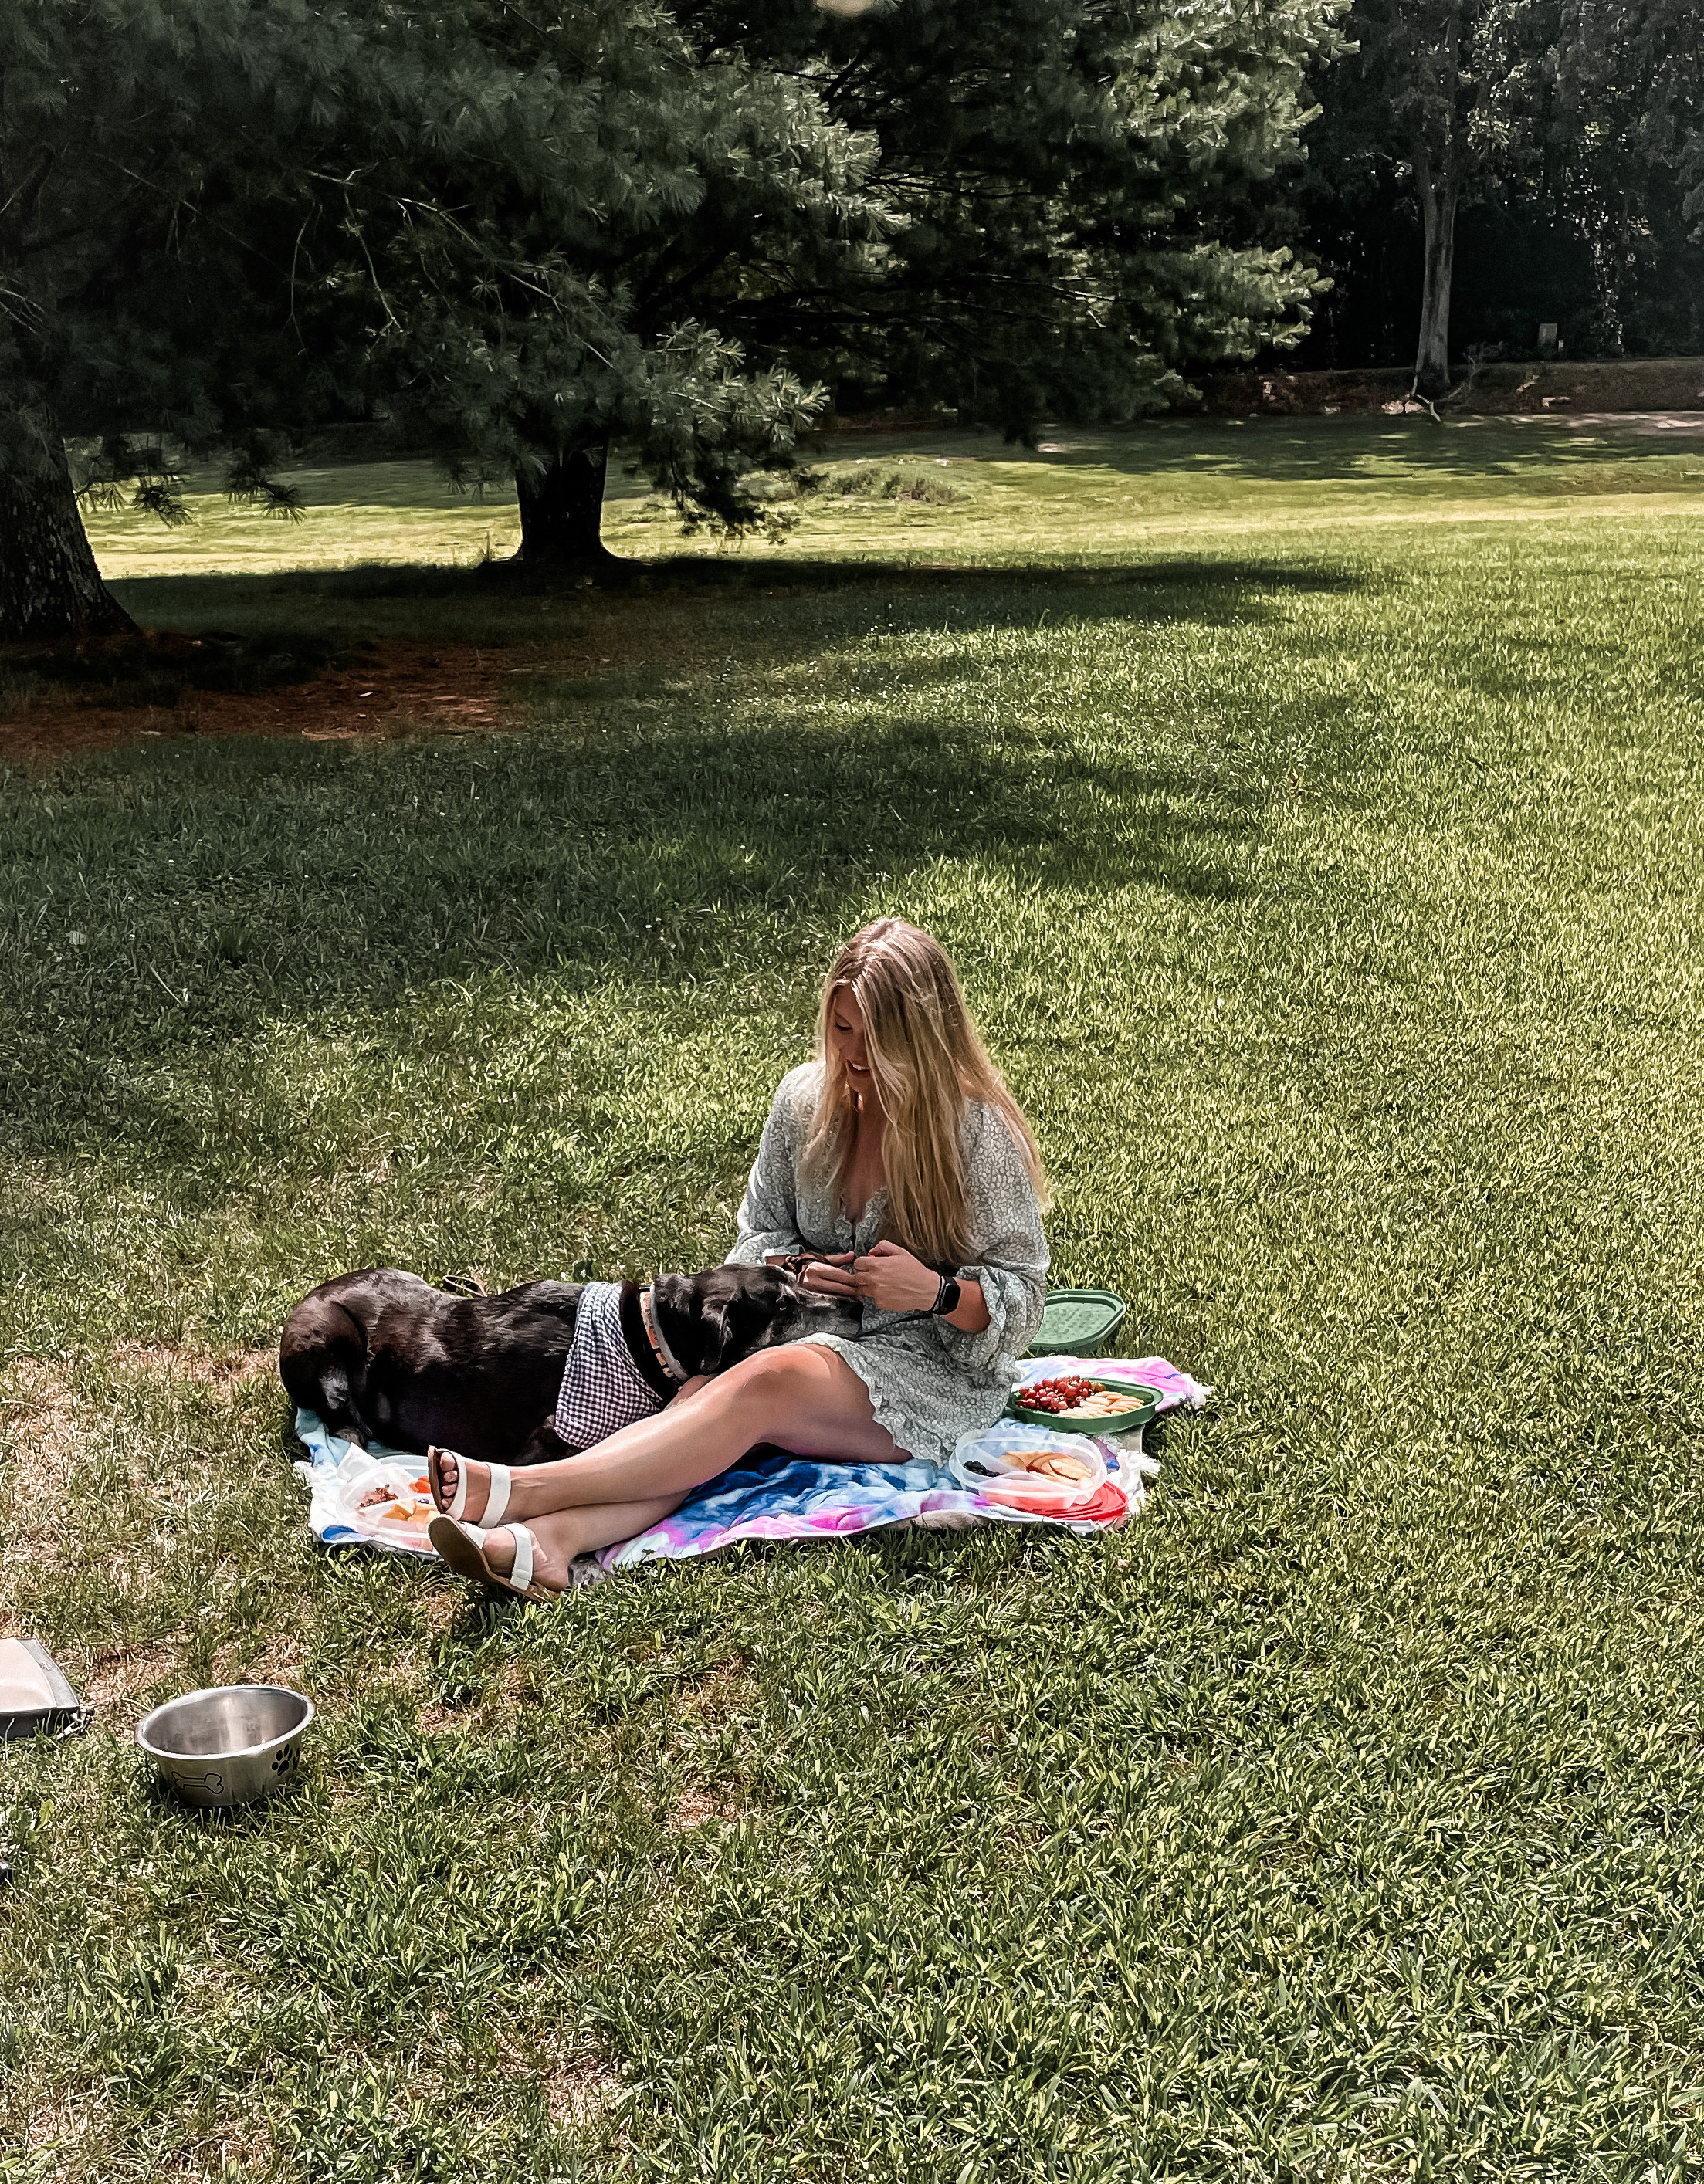 Alysha in a grassy field with dog, Mowgli